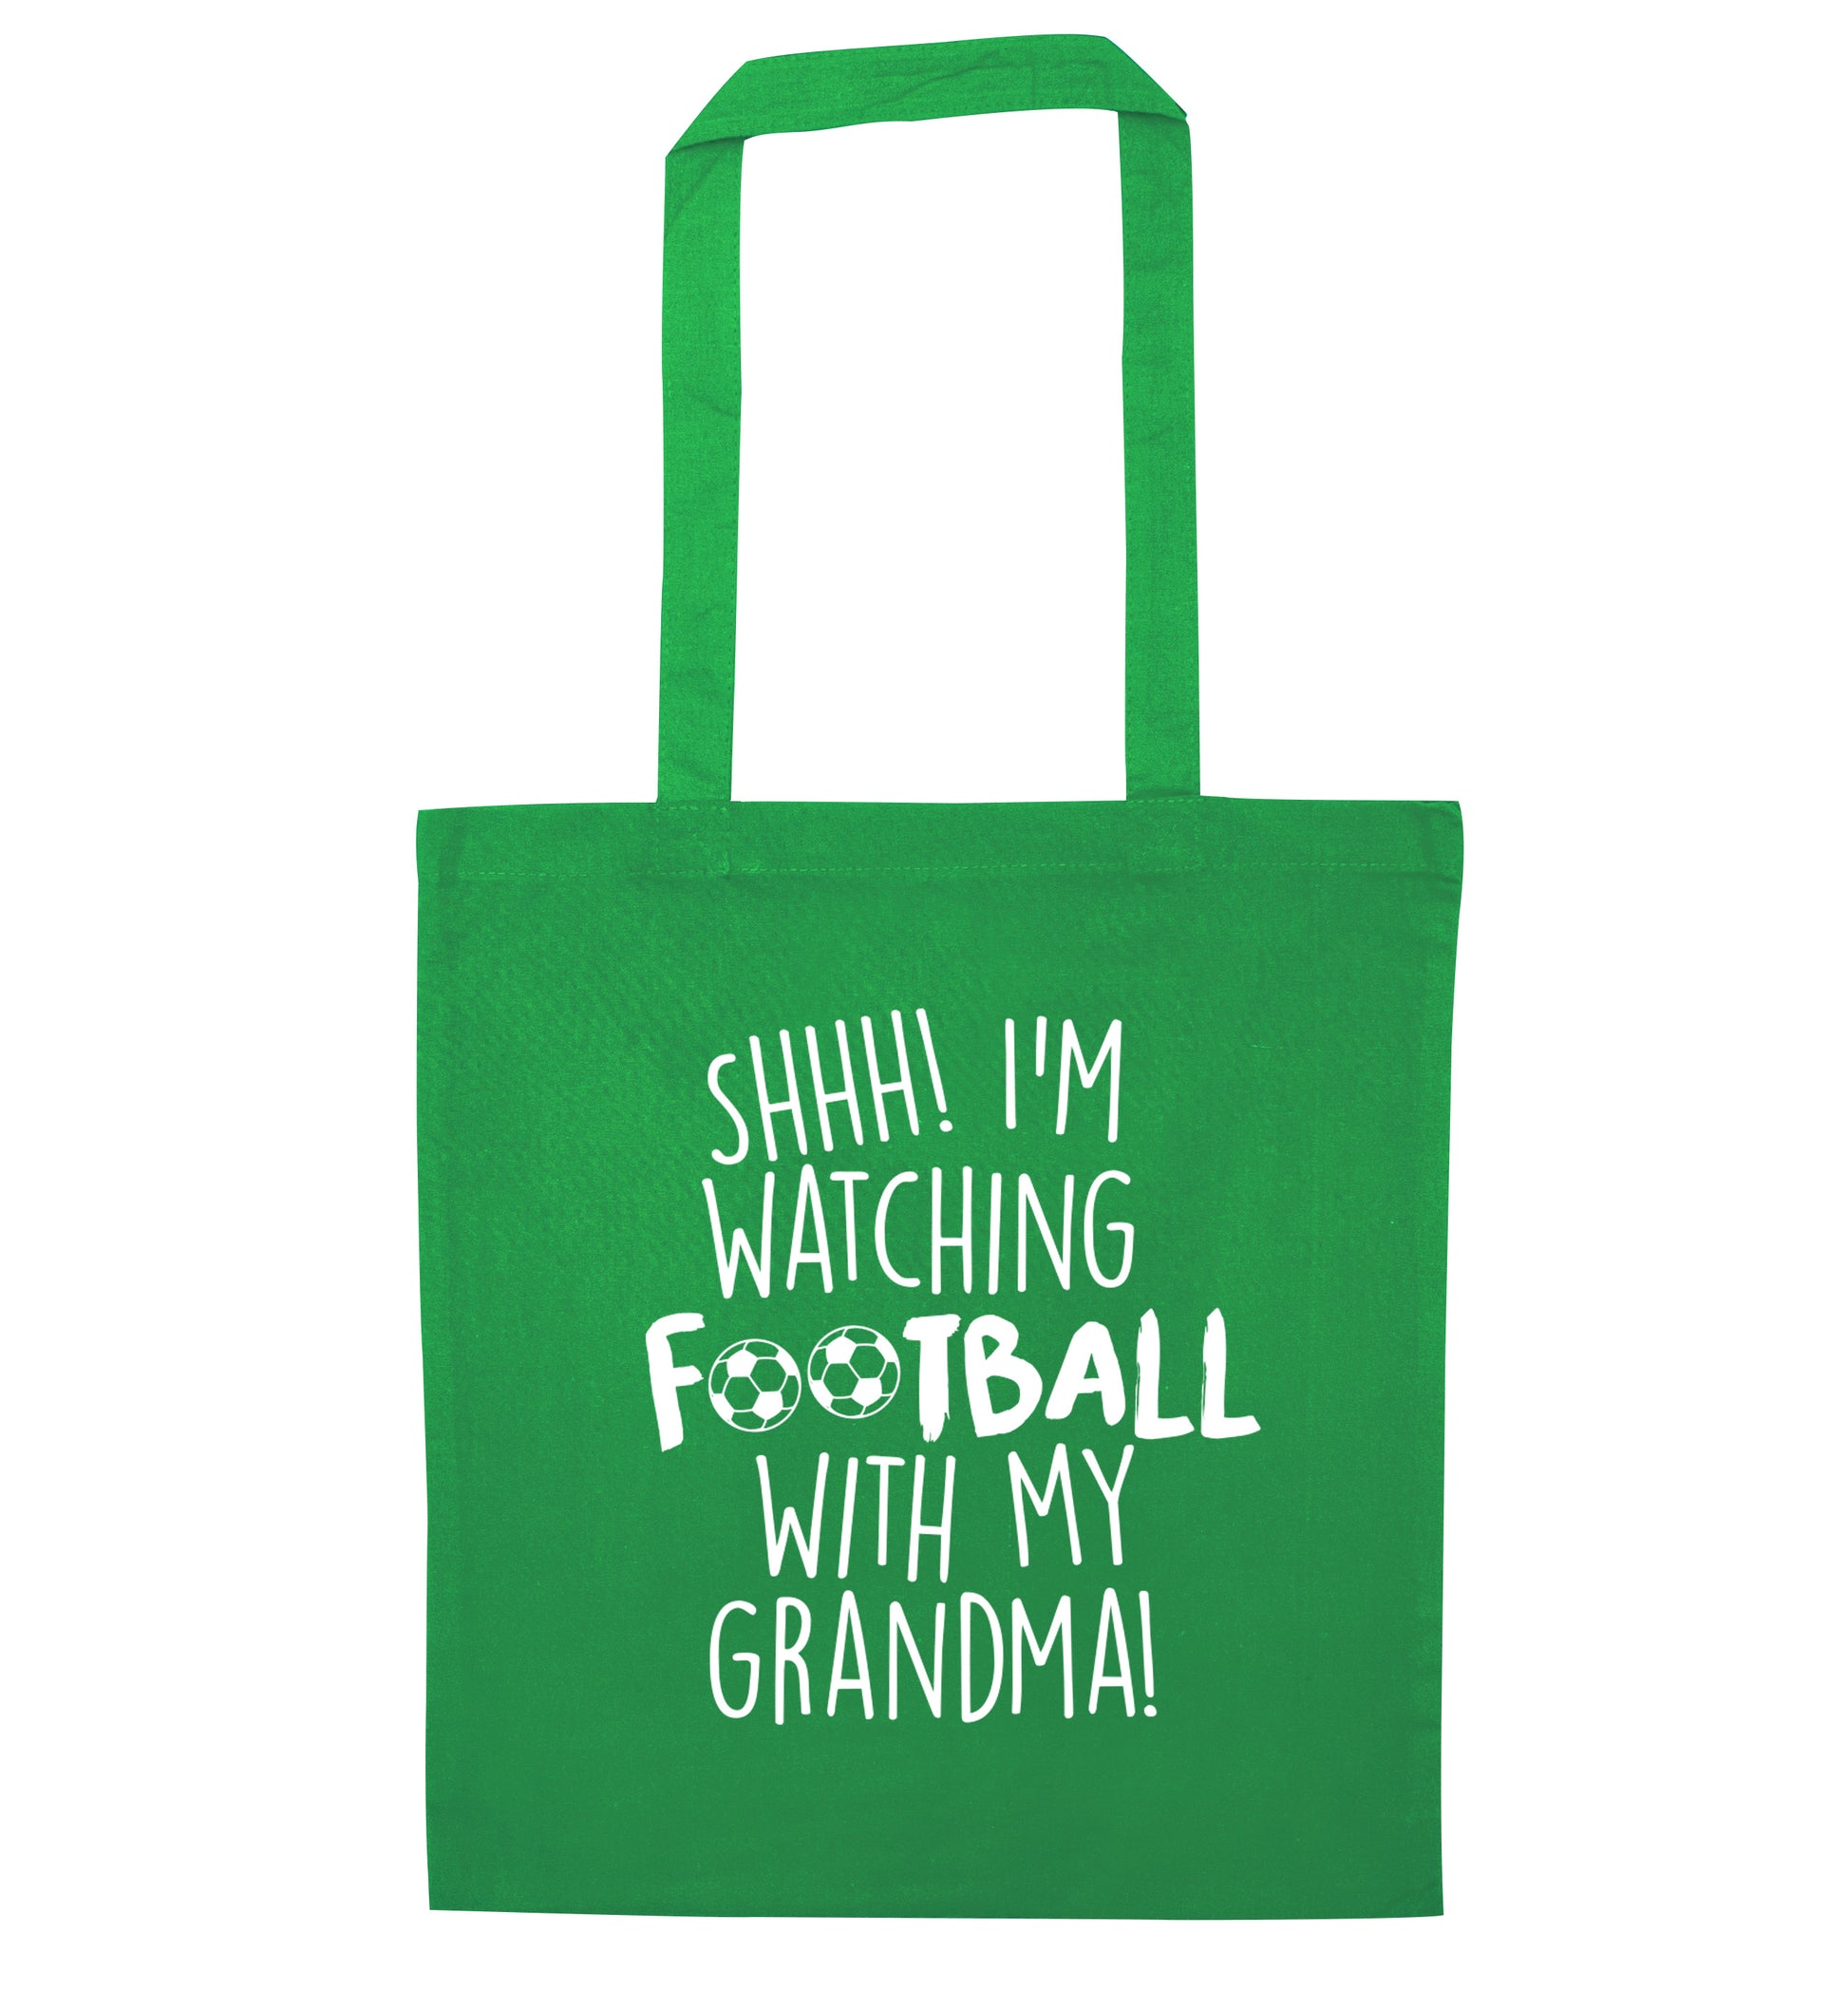 Shhh I'm watching football with my grandma green tote bag